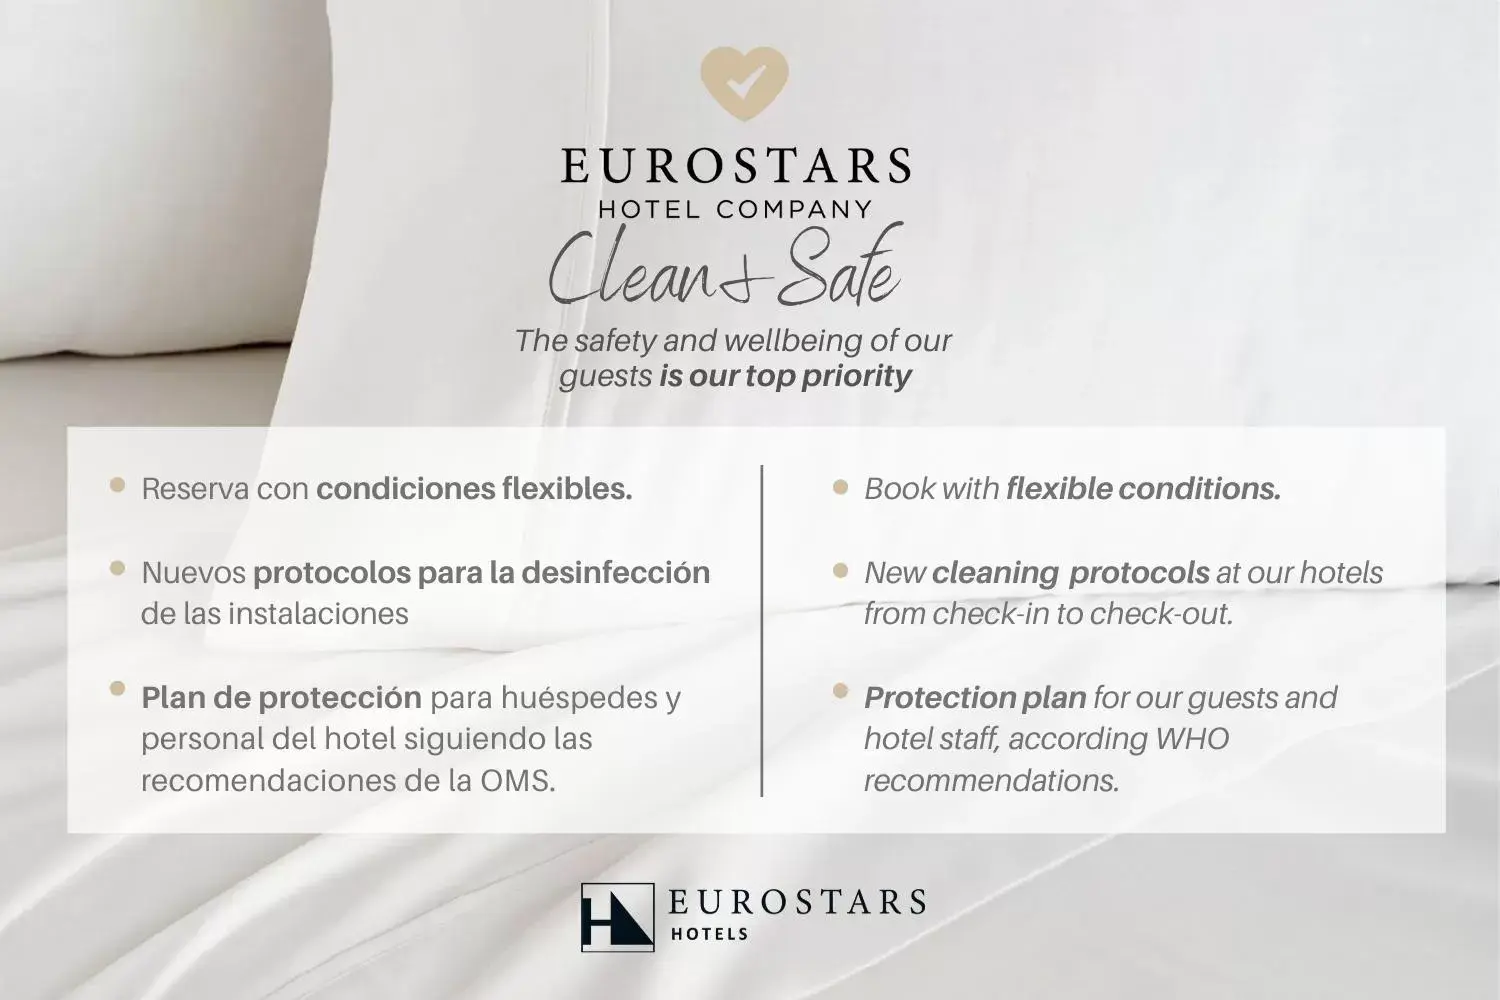 On site, Logo/Certificate/Sign/Award in Eurostars Hotel Excelsior